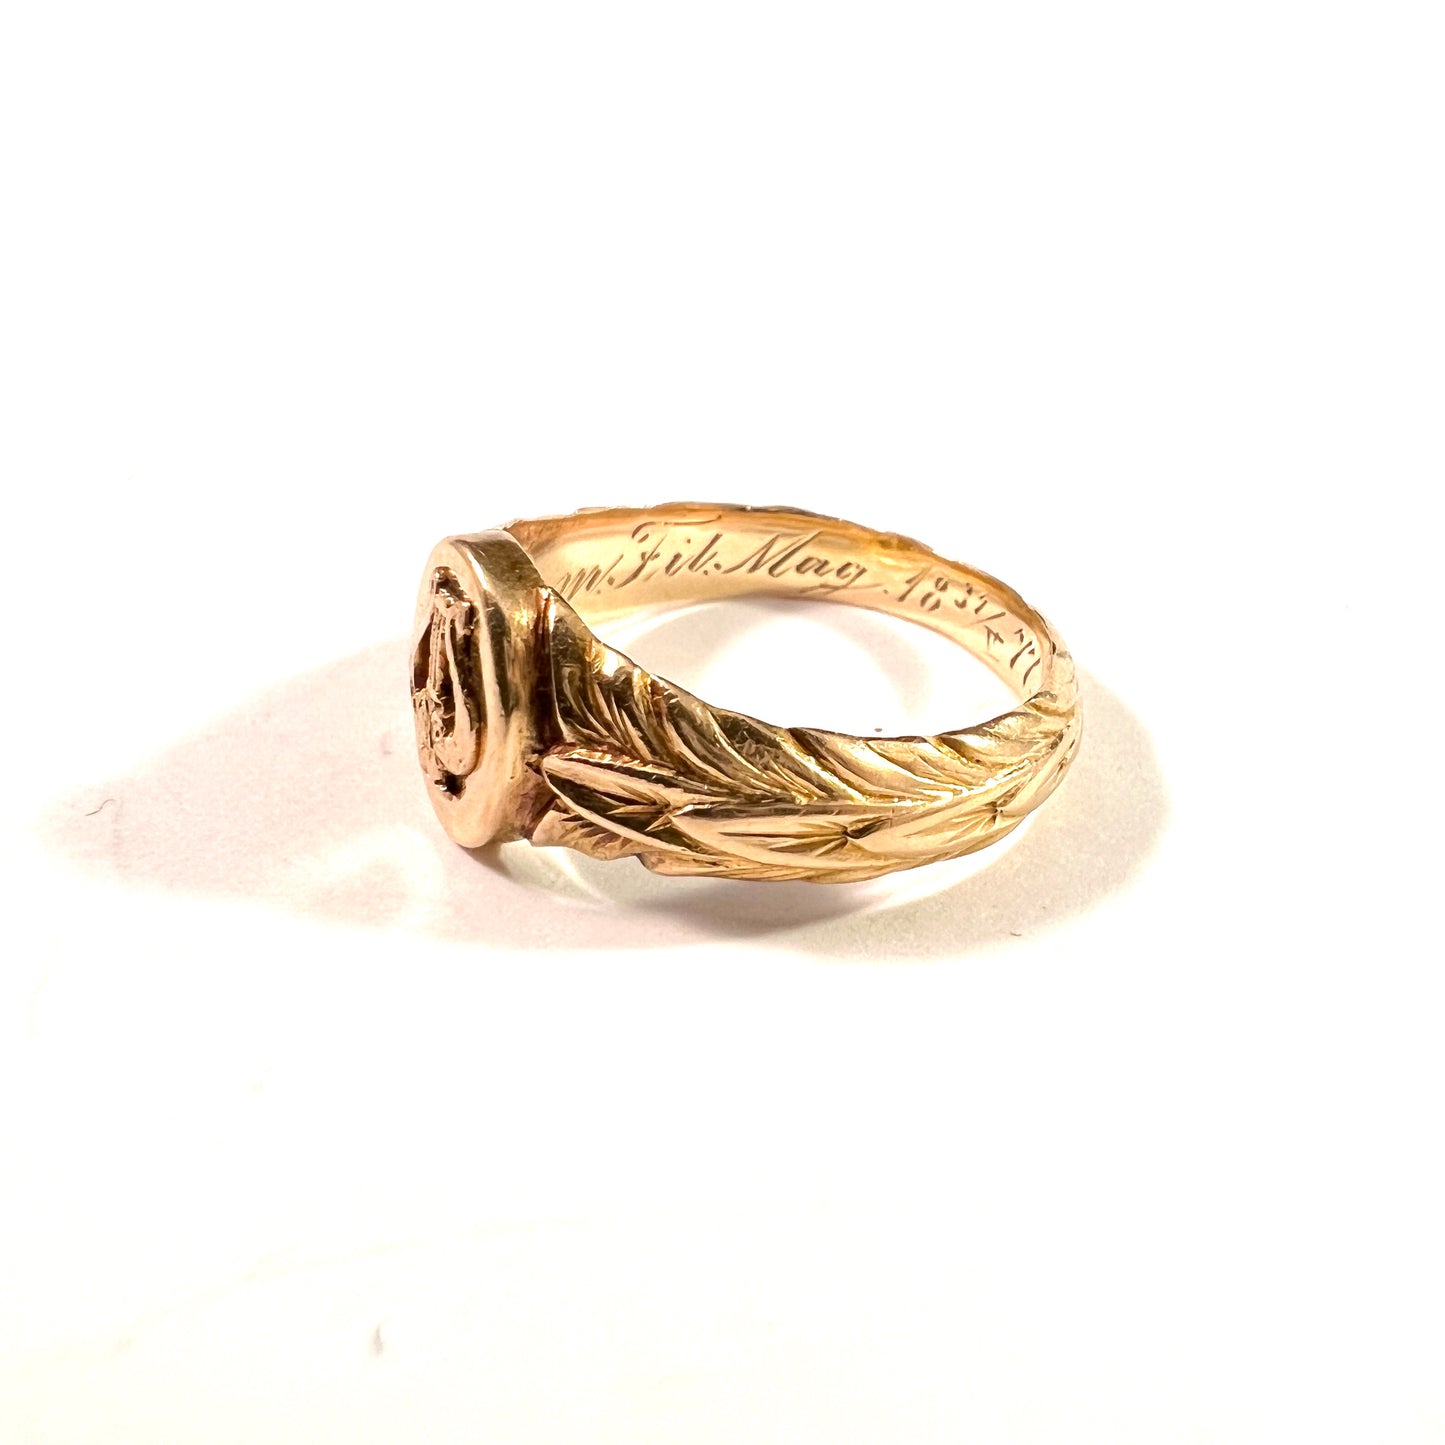 Roland Mellin, Finland year 1860. Antique Victorian 18k Gold Ring.